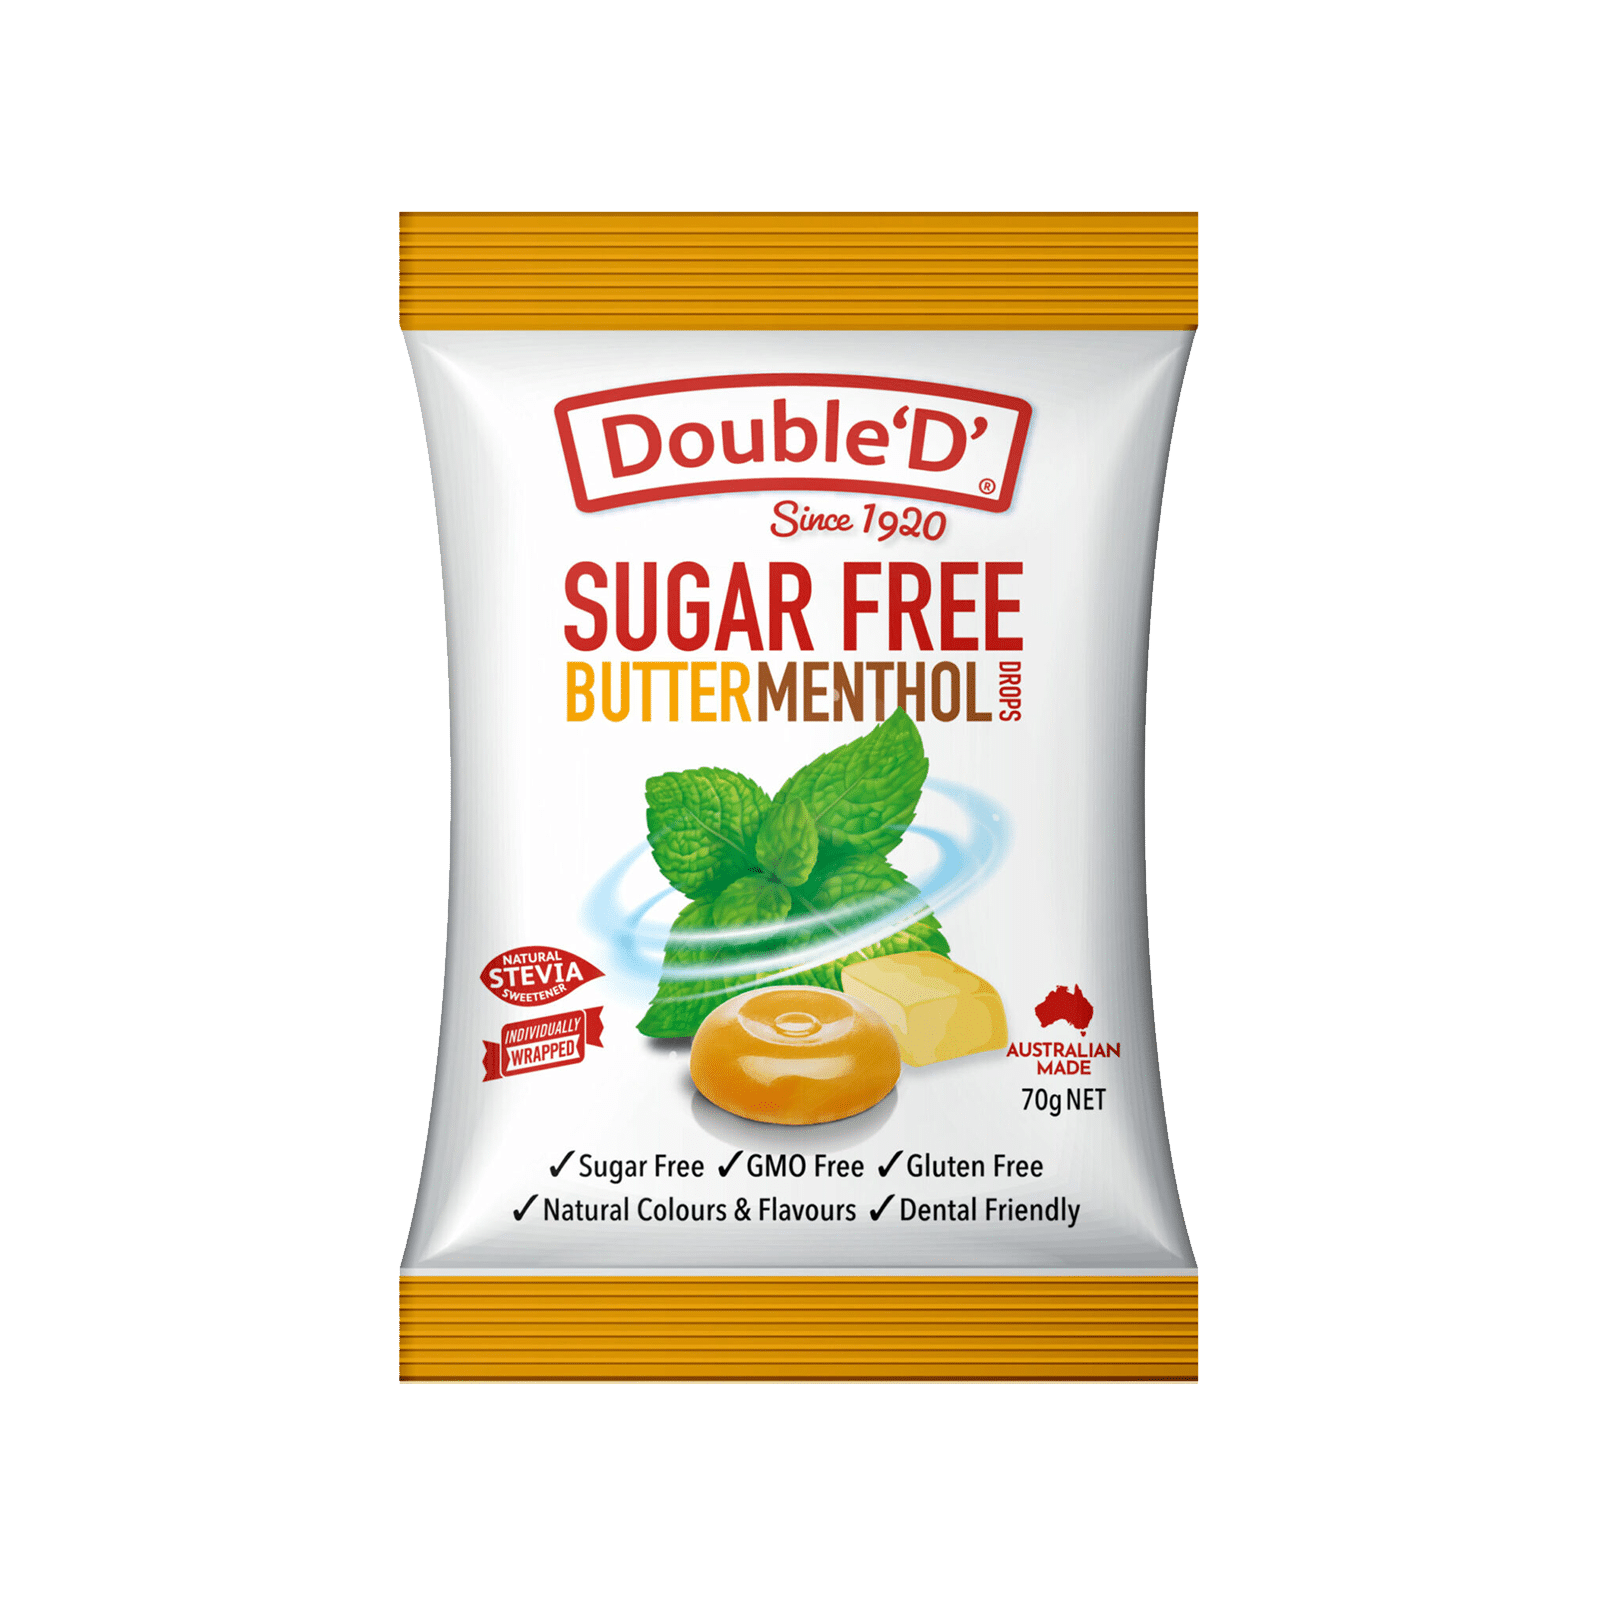 DOUBLE D Sugar Free Fruit Drops 90g